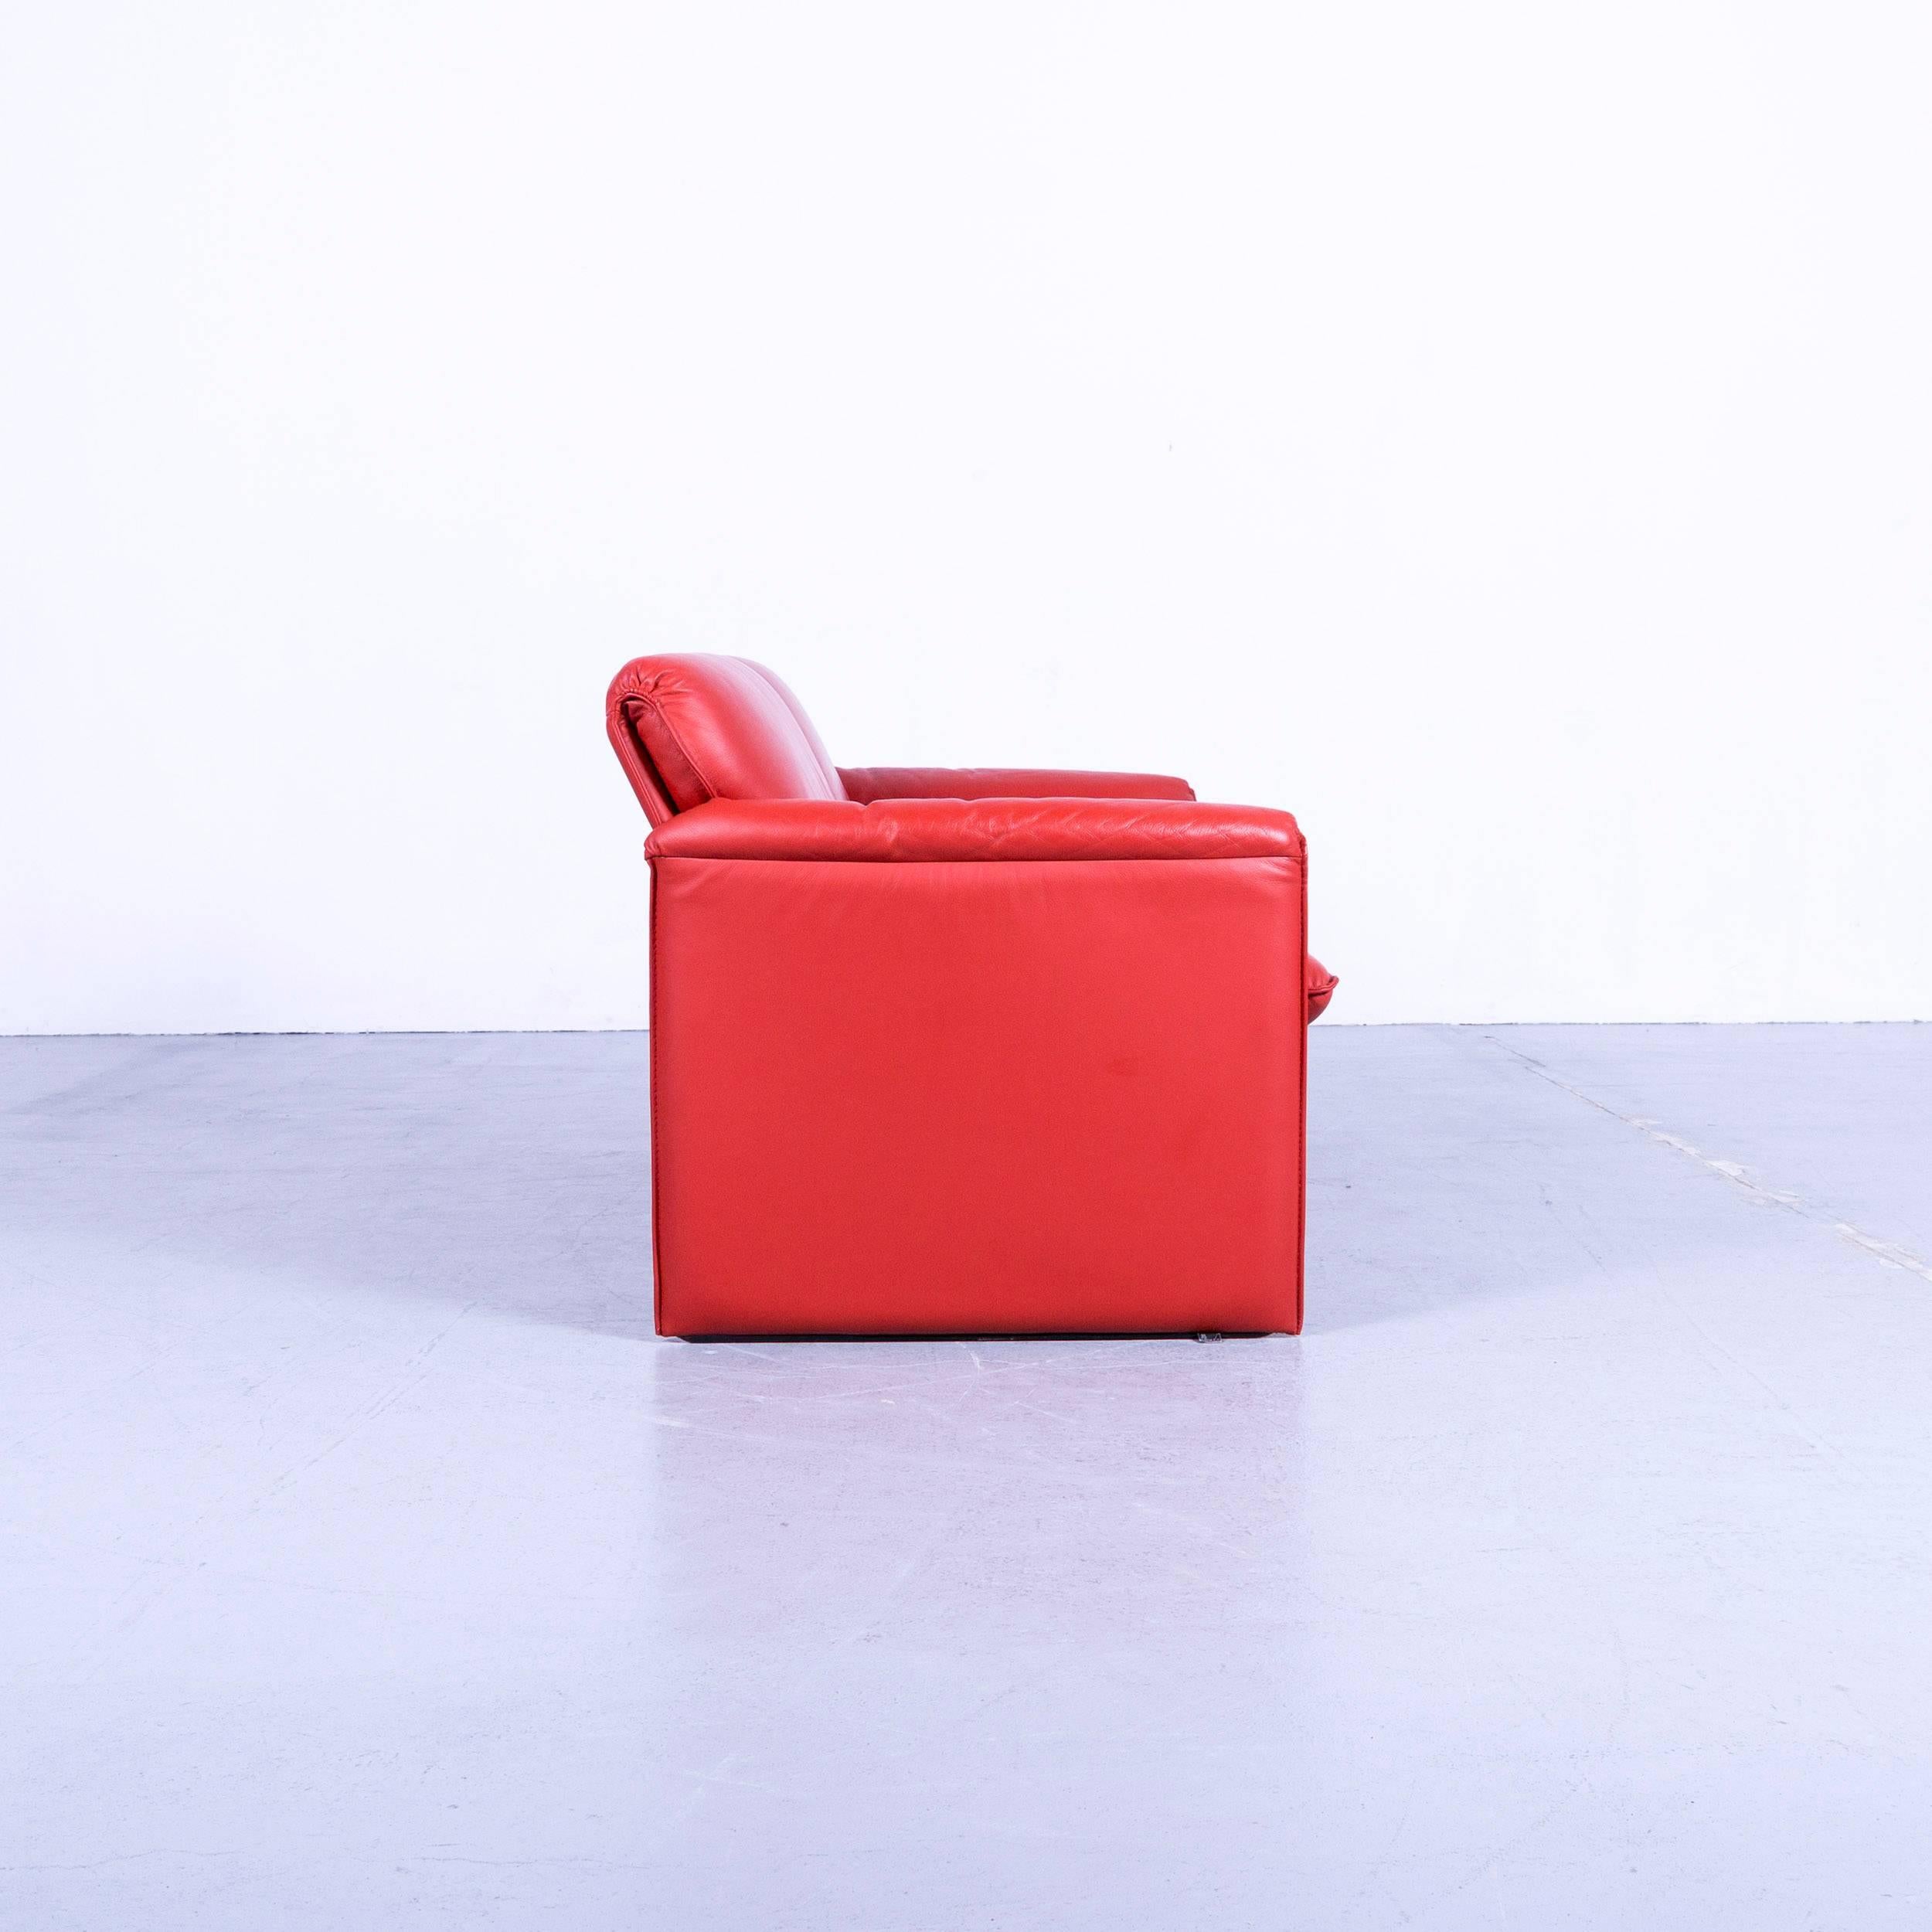 Leolux Bora Designer Sofa Leather Orange Red Two-Seat Couch Modern For Sale 2